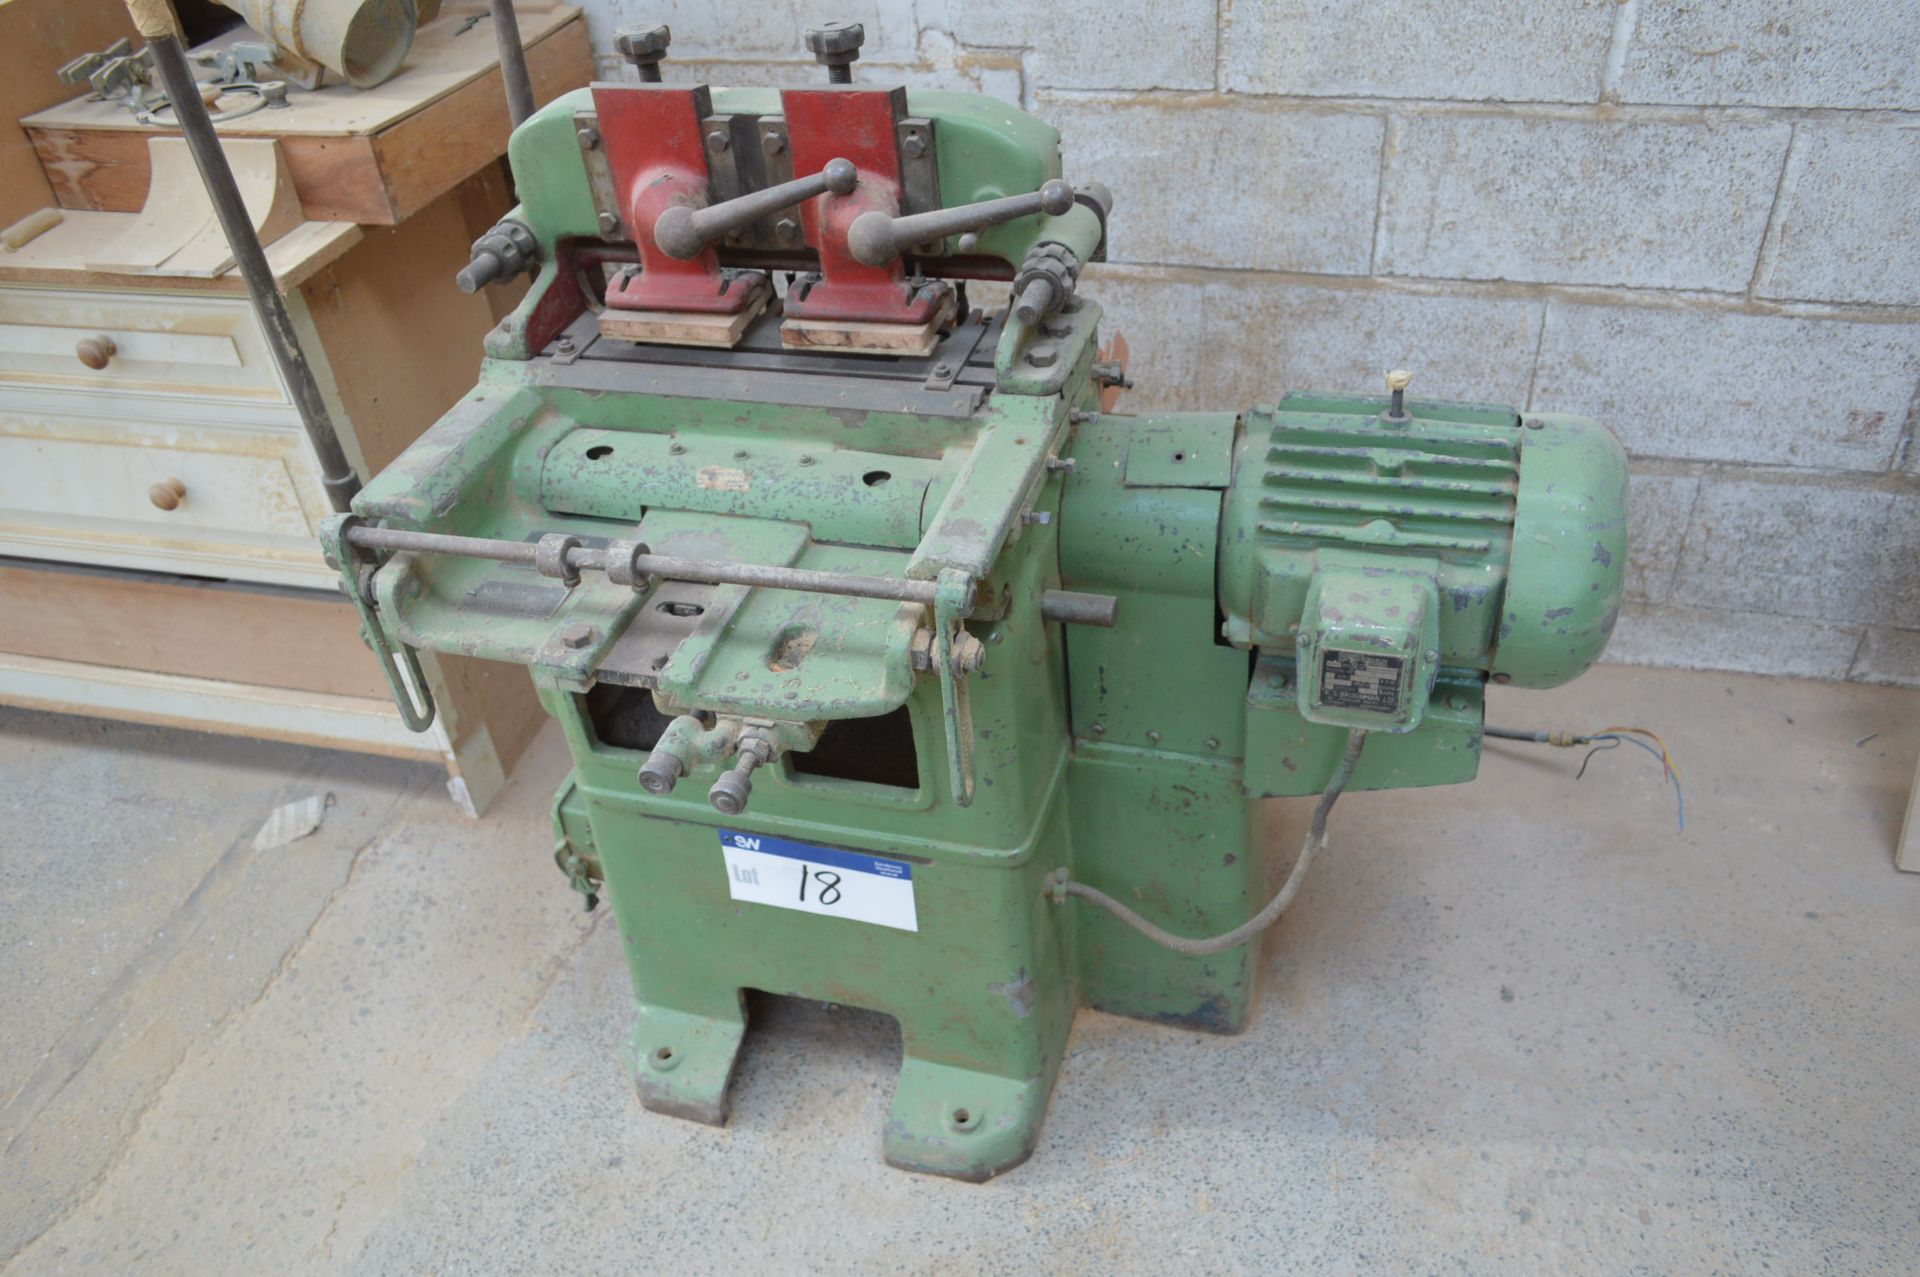 Brookman 15RMM Dovetailing Machine, serial no. 2100-132-1